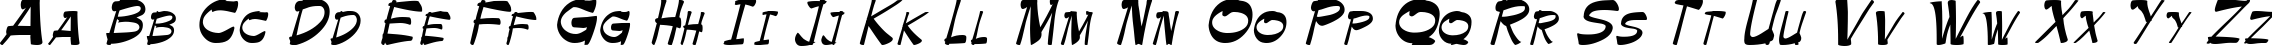 Пример написания английского алфавита шрифтом Palette